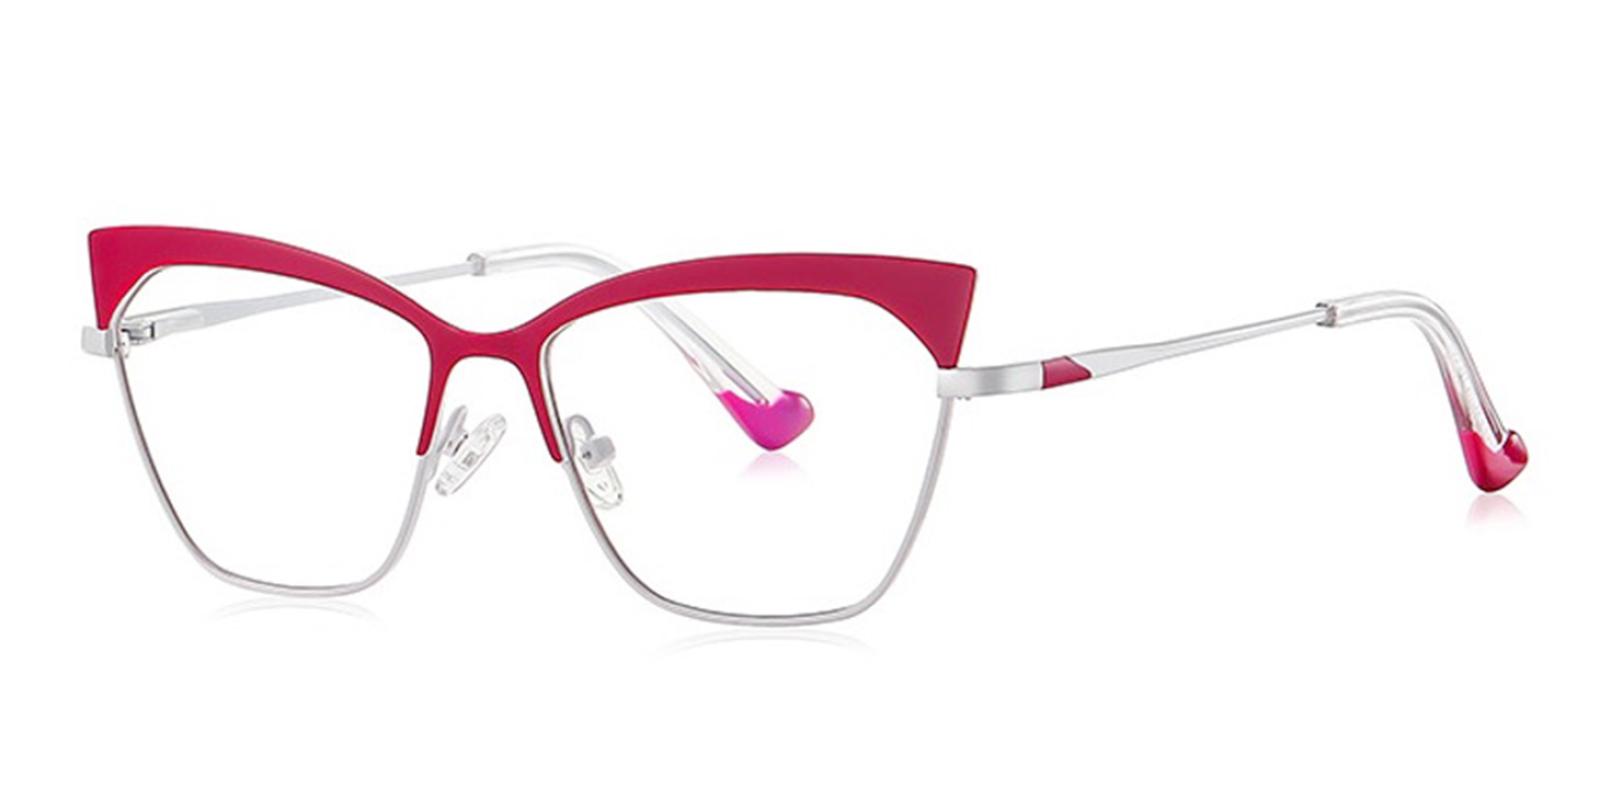 Tradla Red Metal Eyeglasses , NosePads , SpringHinges Frames from ABBE Glasses